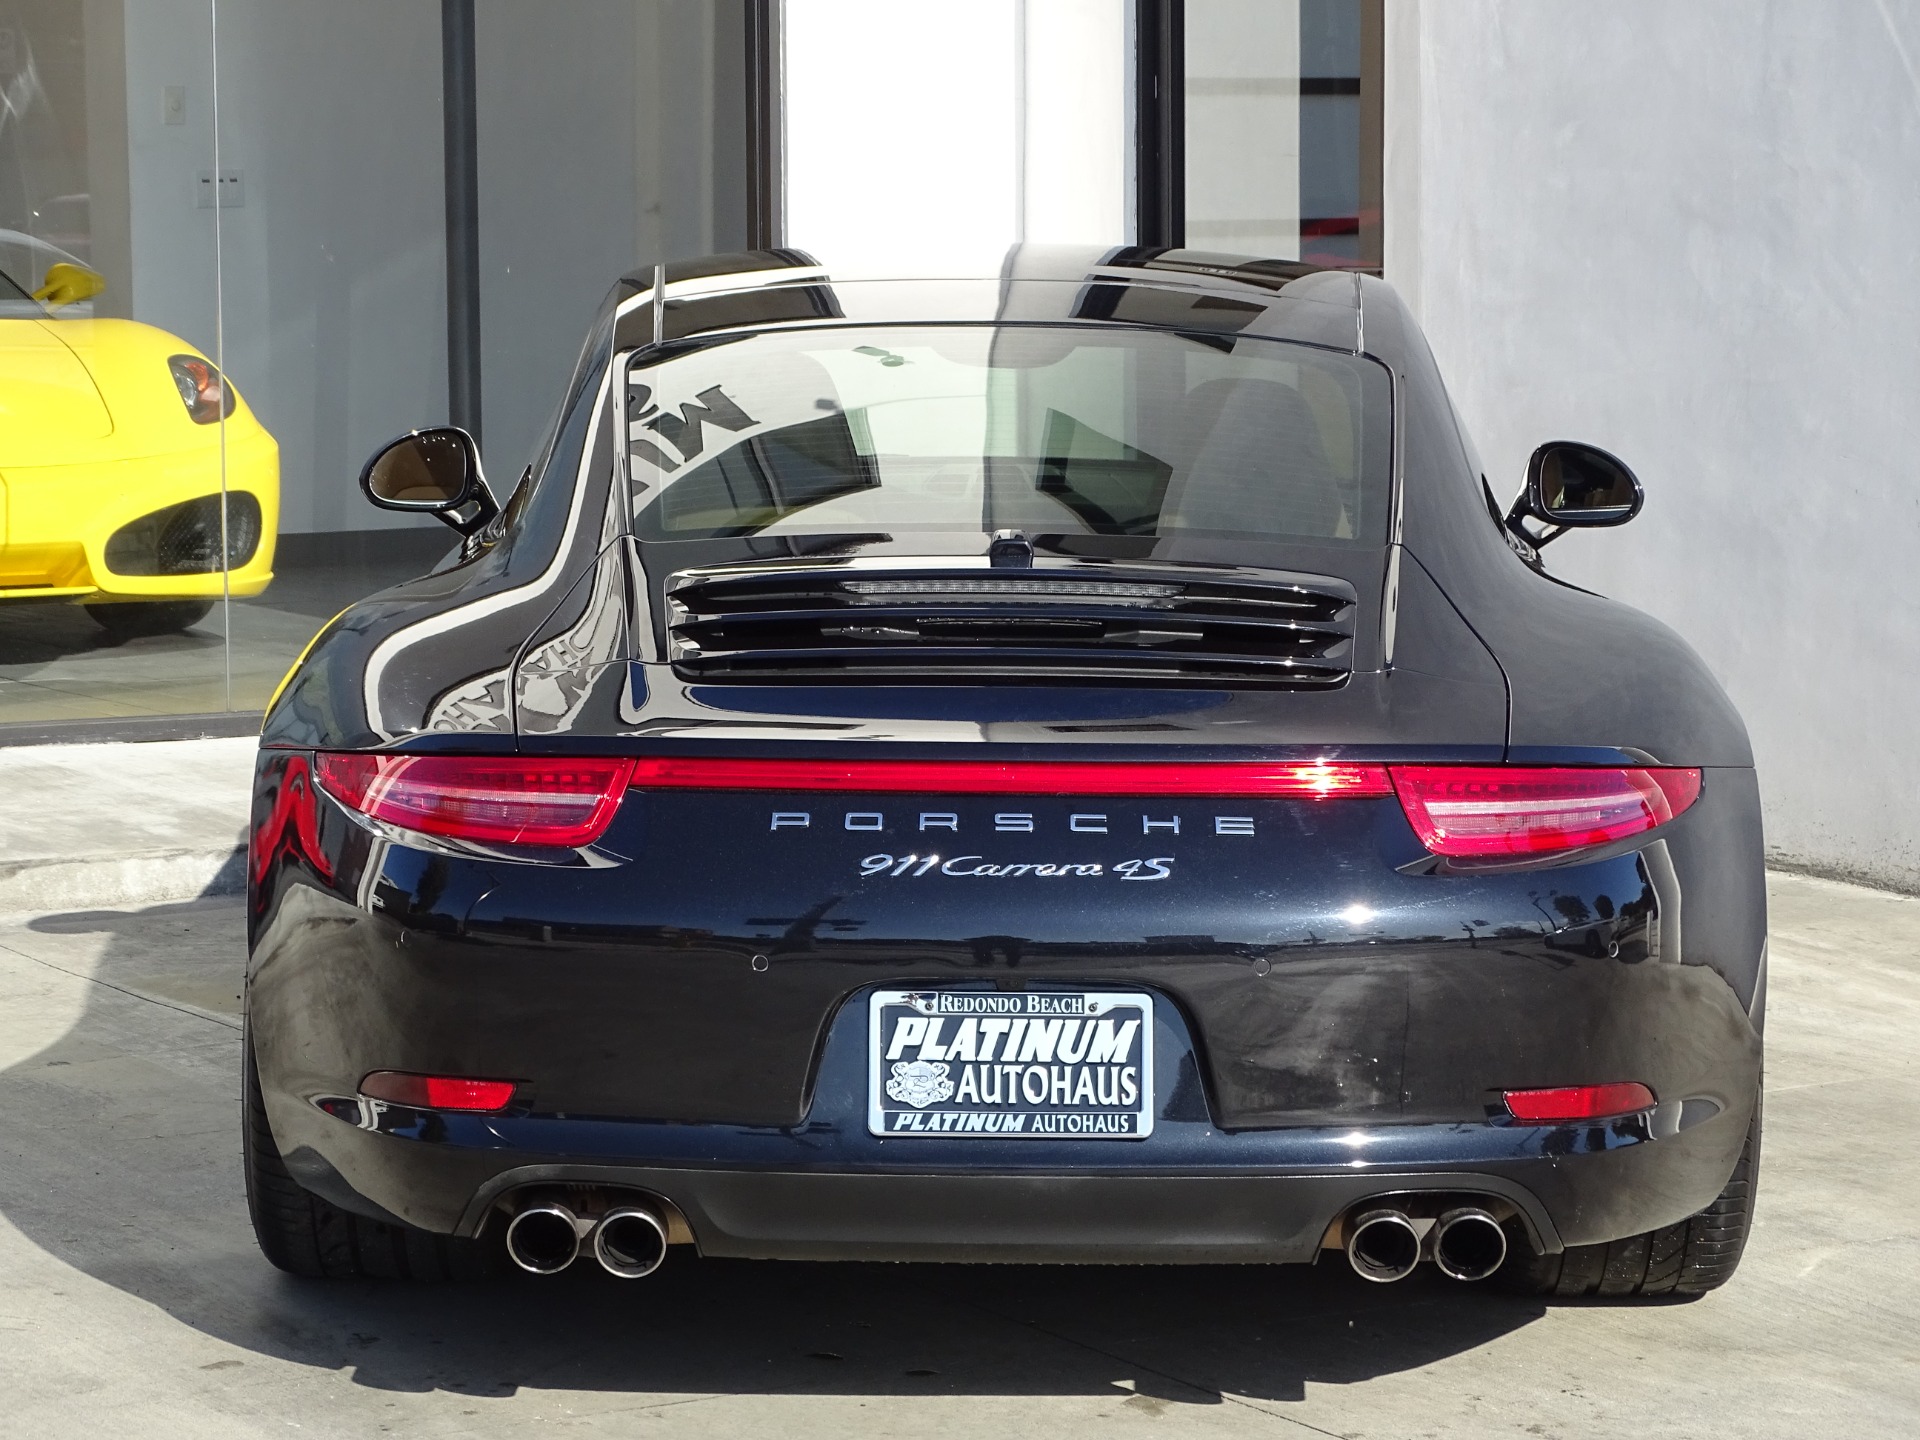 2015 Porsche 911 Carrera 4S Stock # 124175 for sale near Redondo Beach, CA  | CA Porsche Dealer